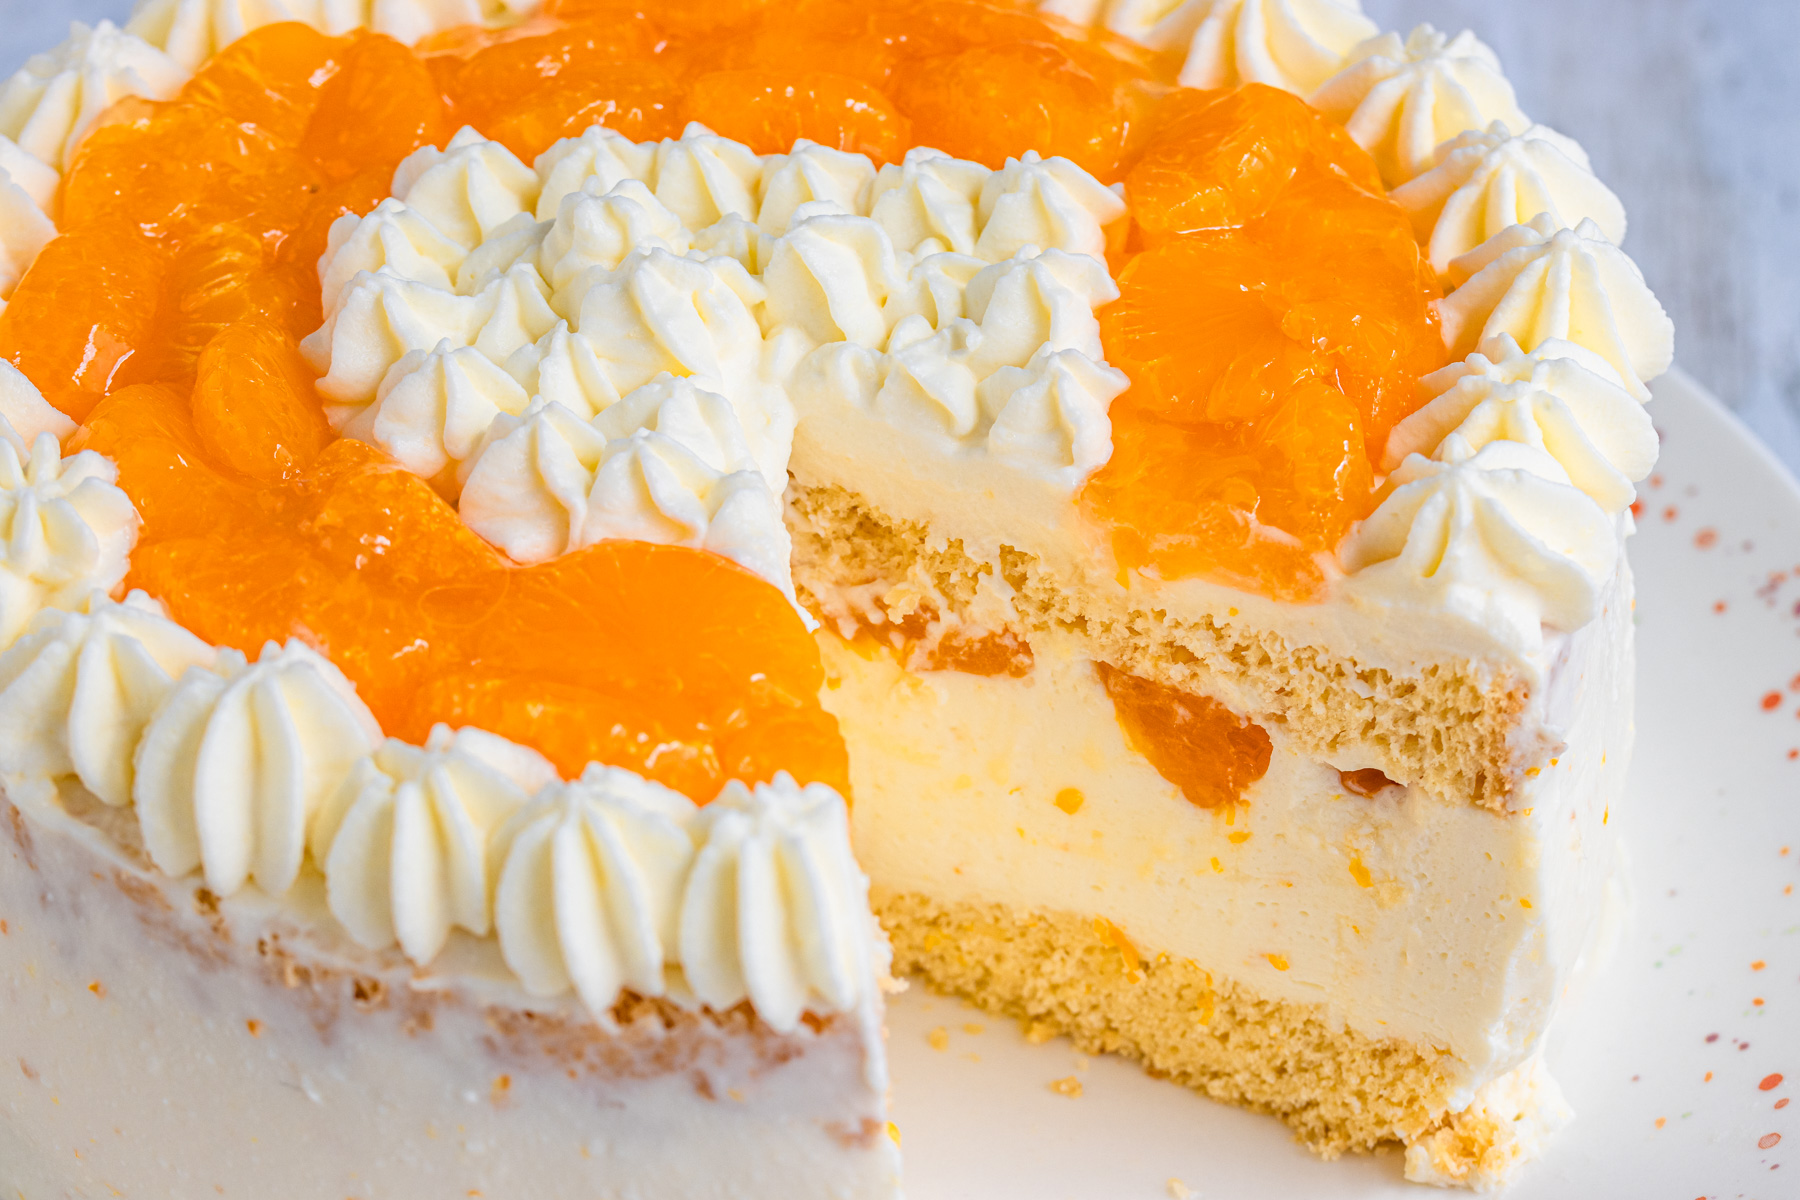 Käse-Sahne-Torte mit Mandarinen